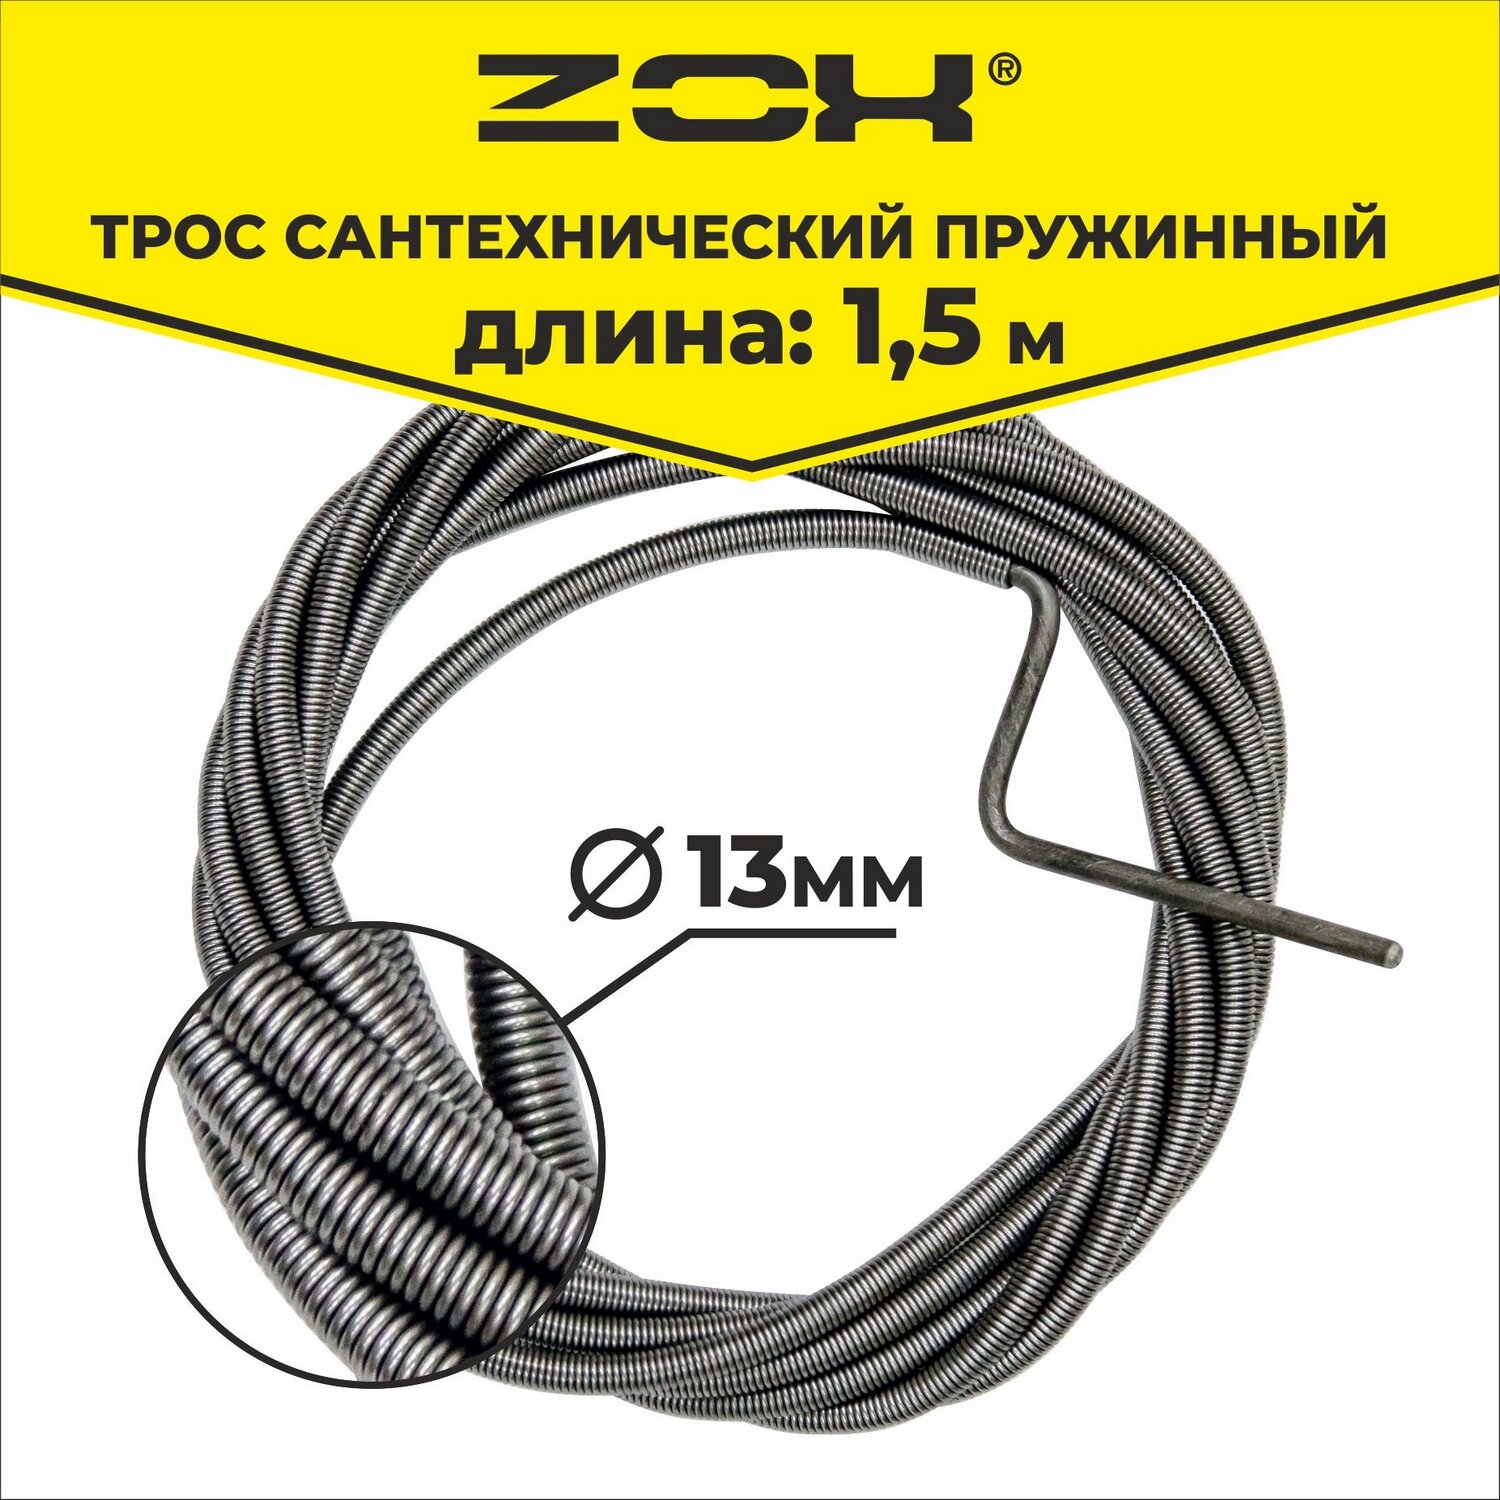 Zox Трос сантехнический 1,5 м 13мм. 521116